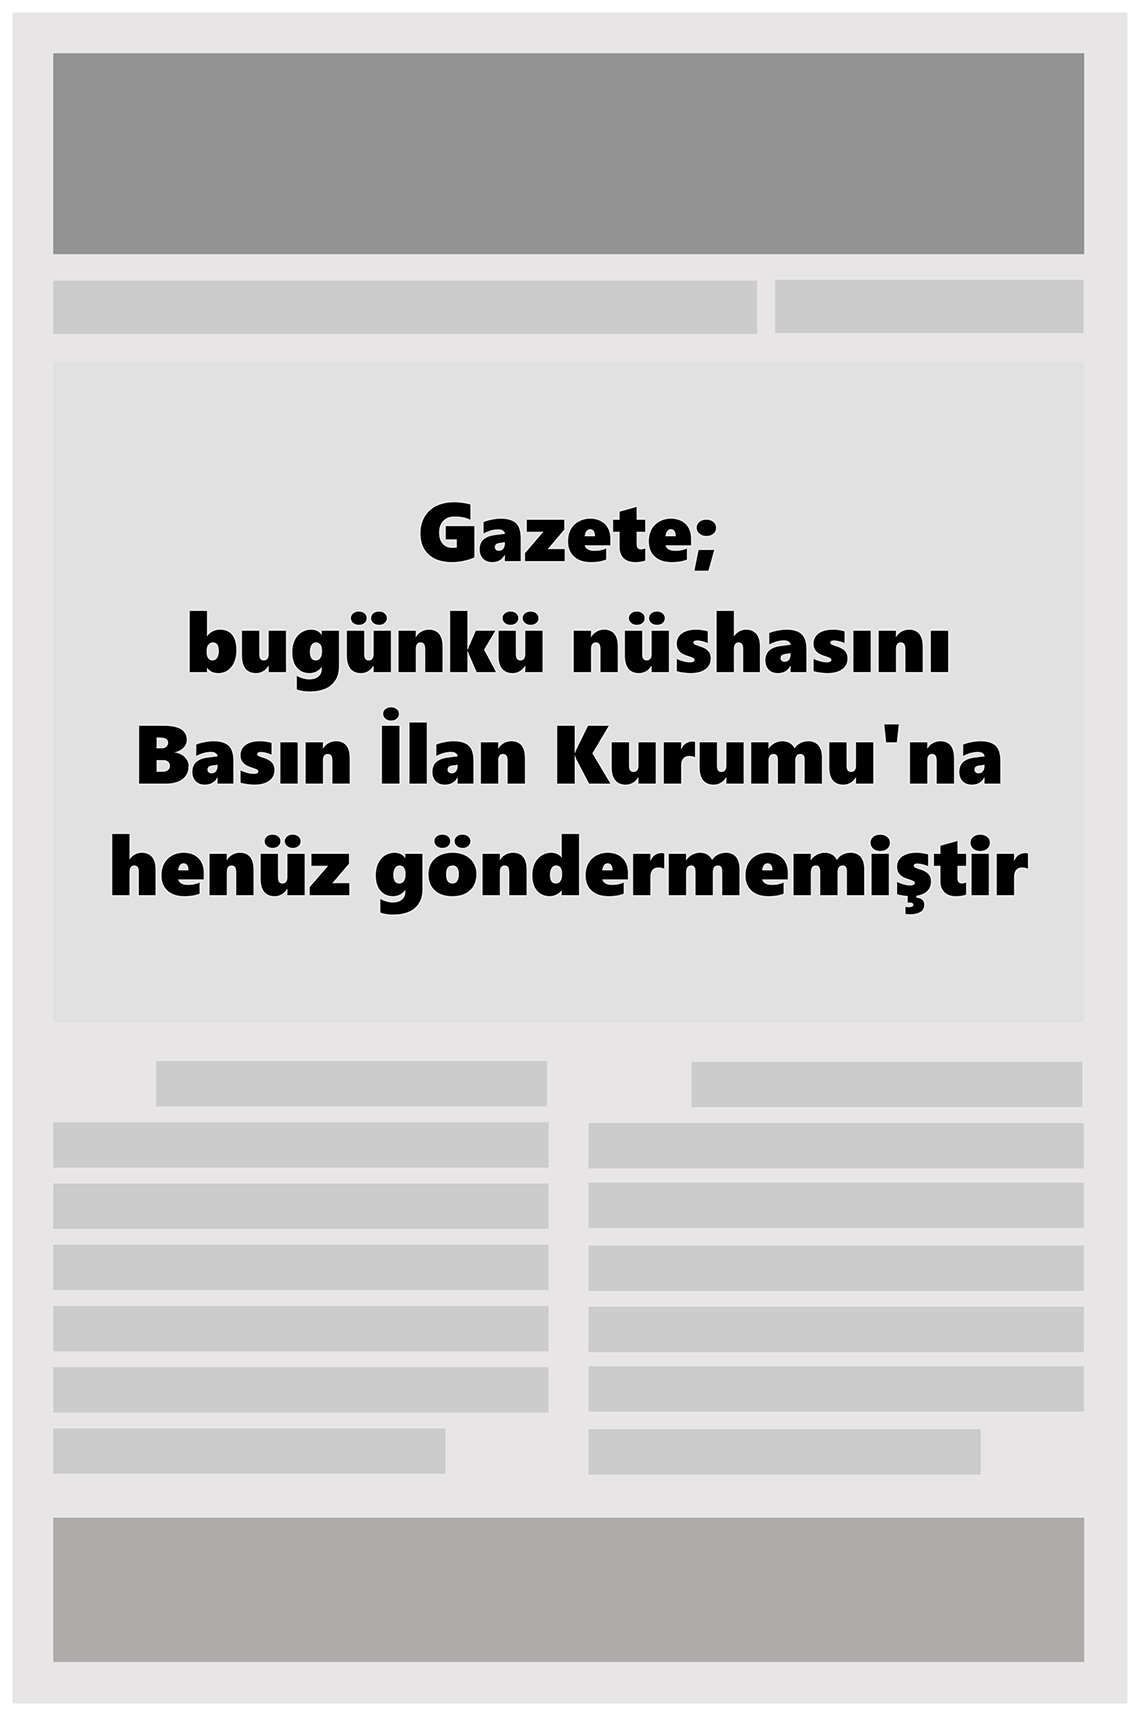 Günaydın Adana Gazete Manşeti